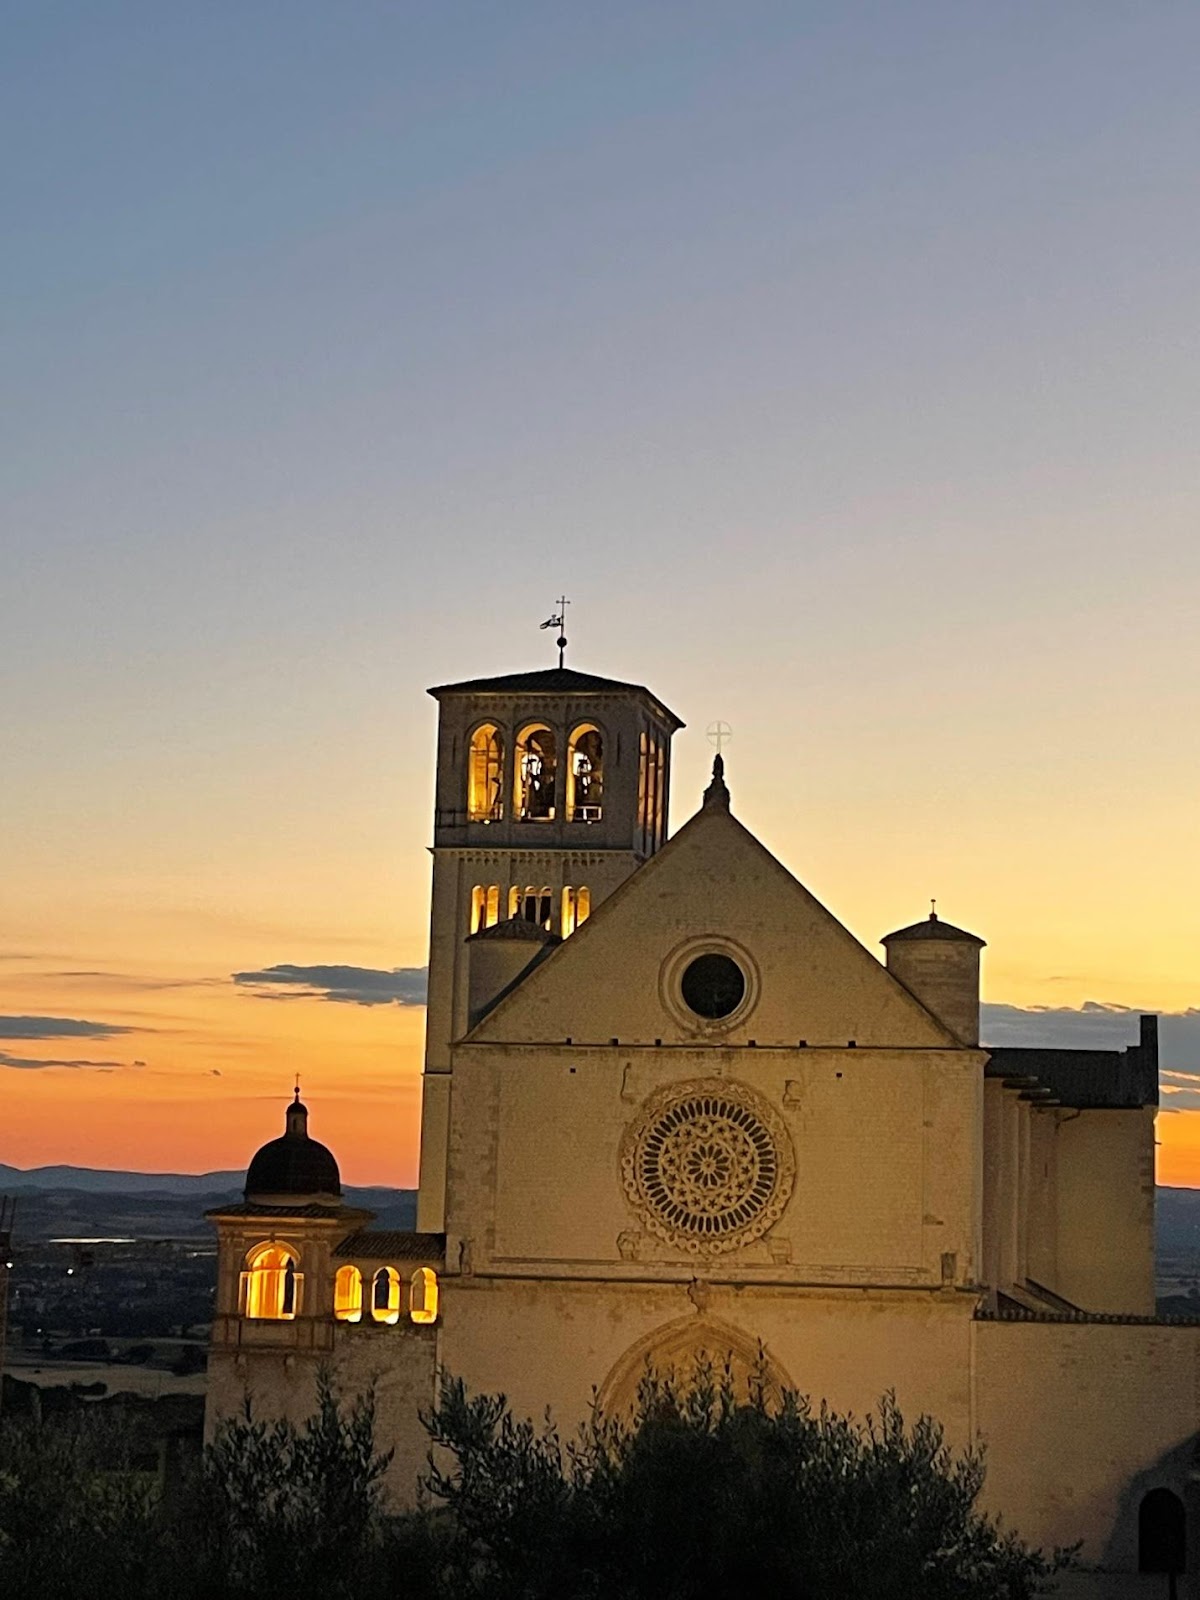 Basilica of San Francesco in Assisi, Italy at susnet. 